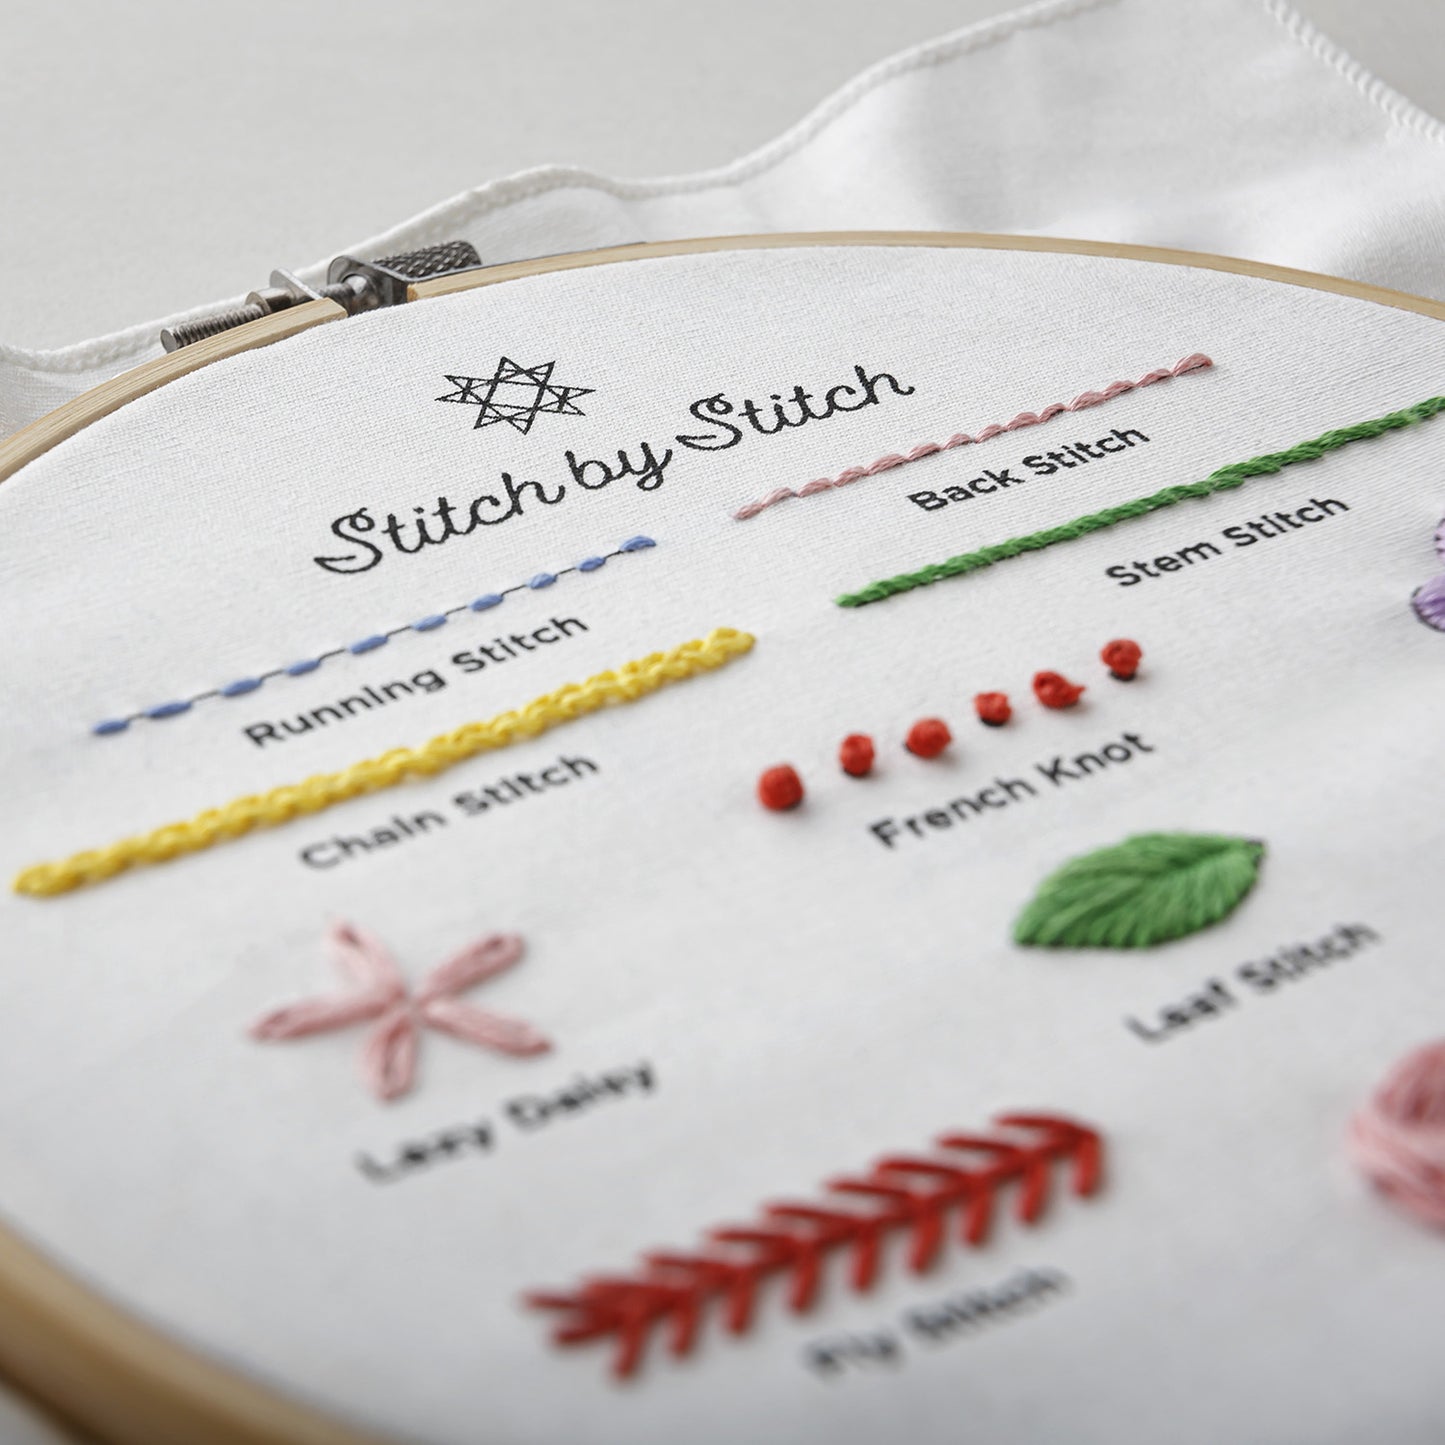 PREORDER - Learn Embroidery Stitch by Stitch with Missouri Star Alternative View #11